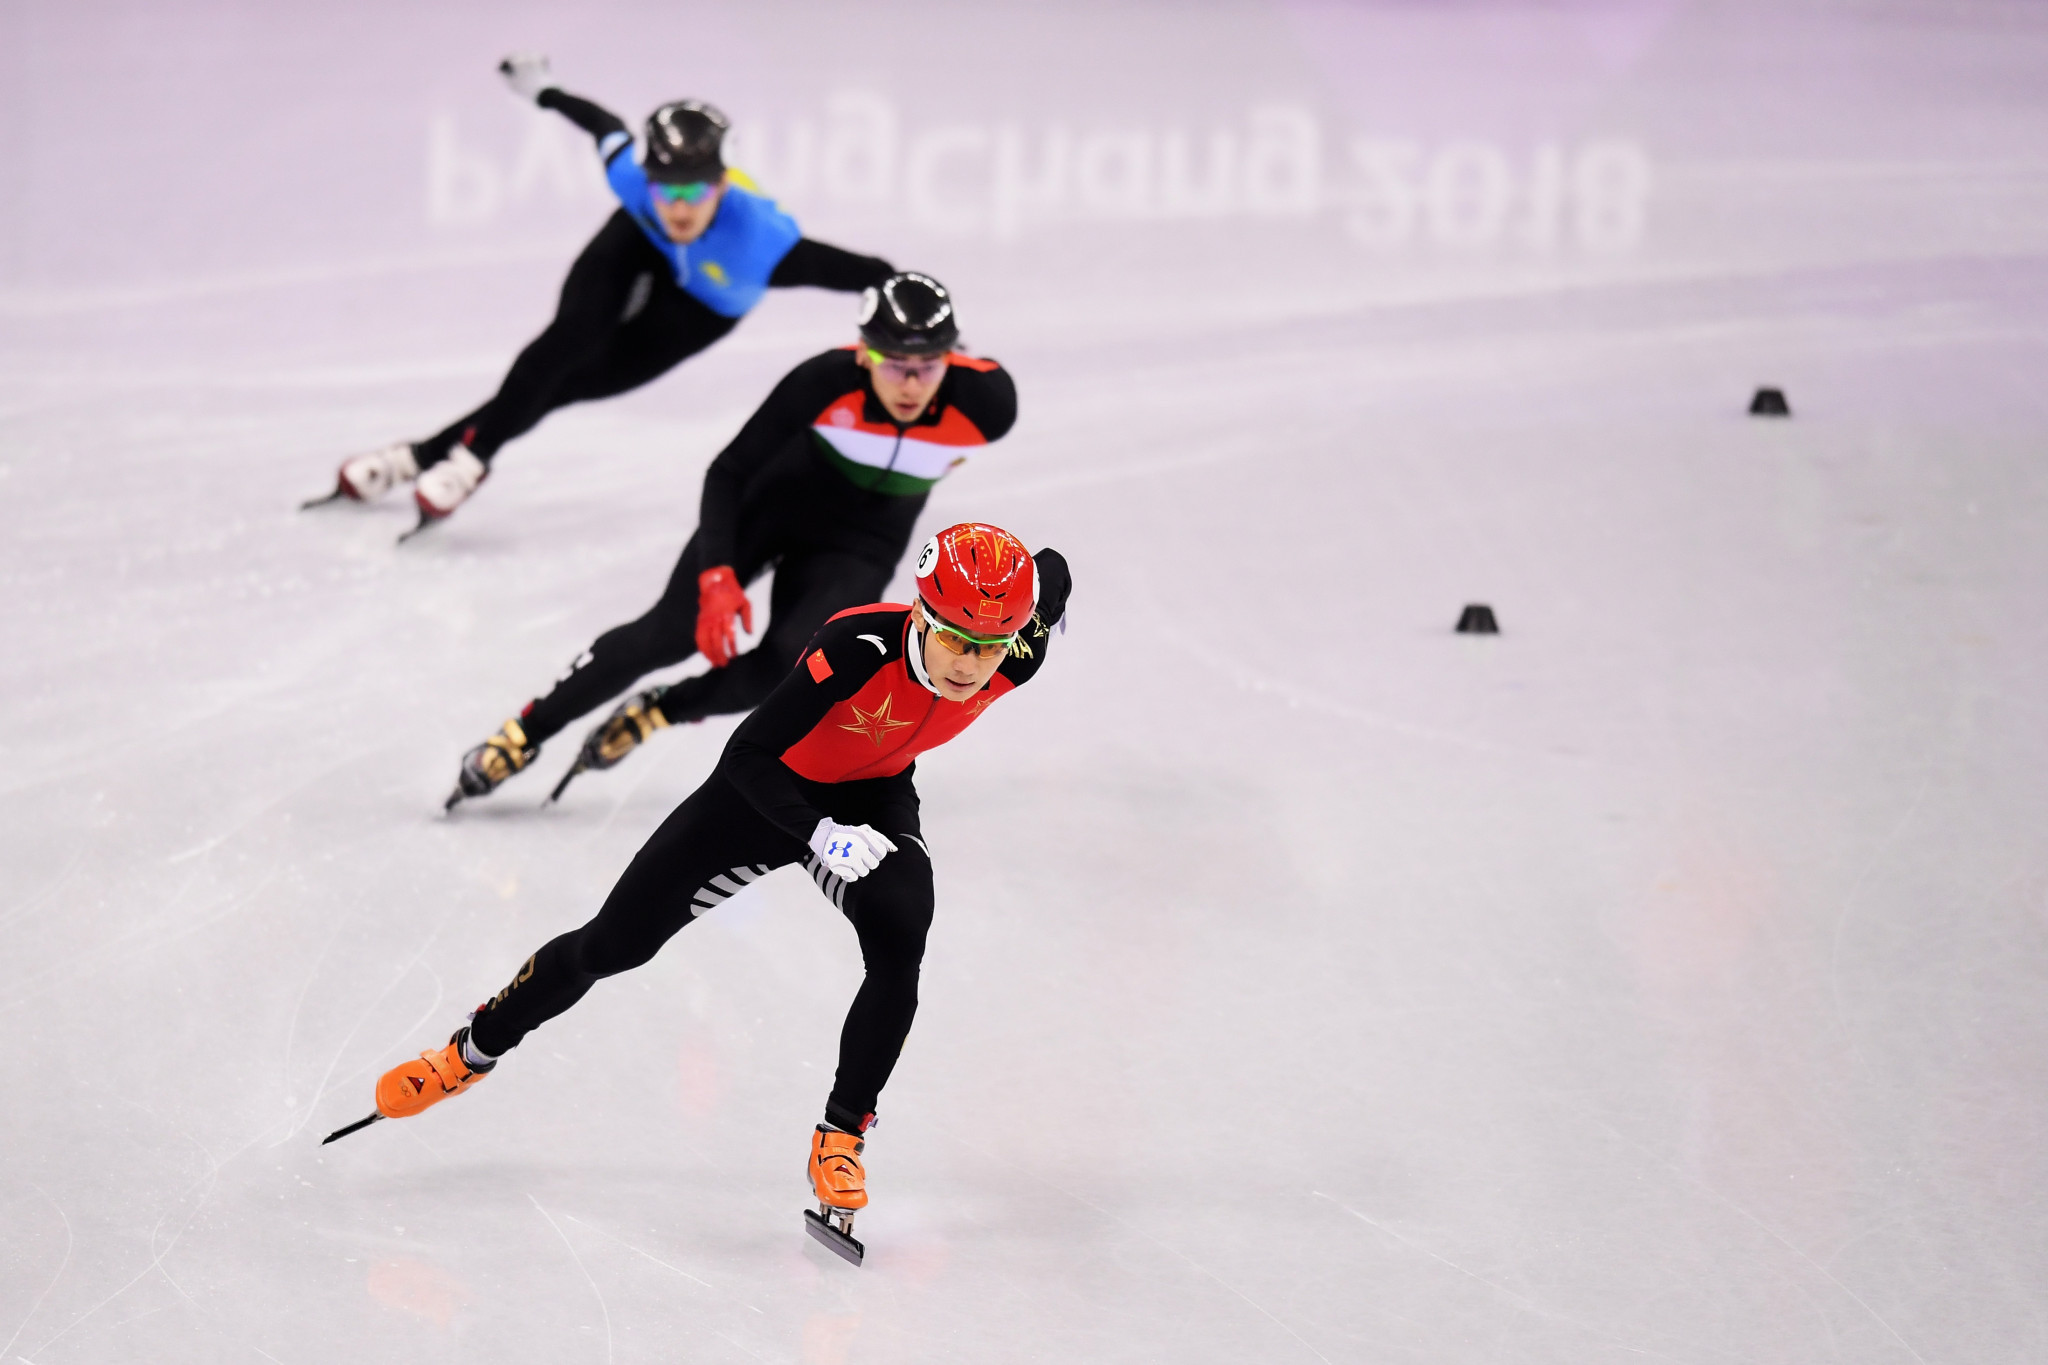 Wu endures difficult start to ISU World Short Track Speed Skating Championships